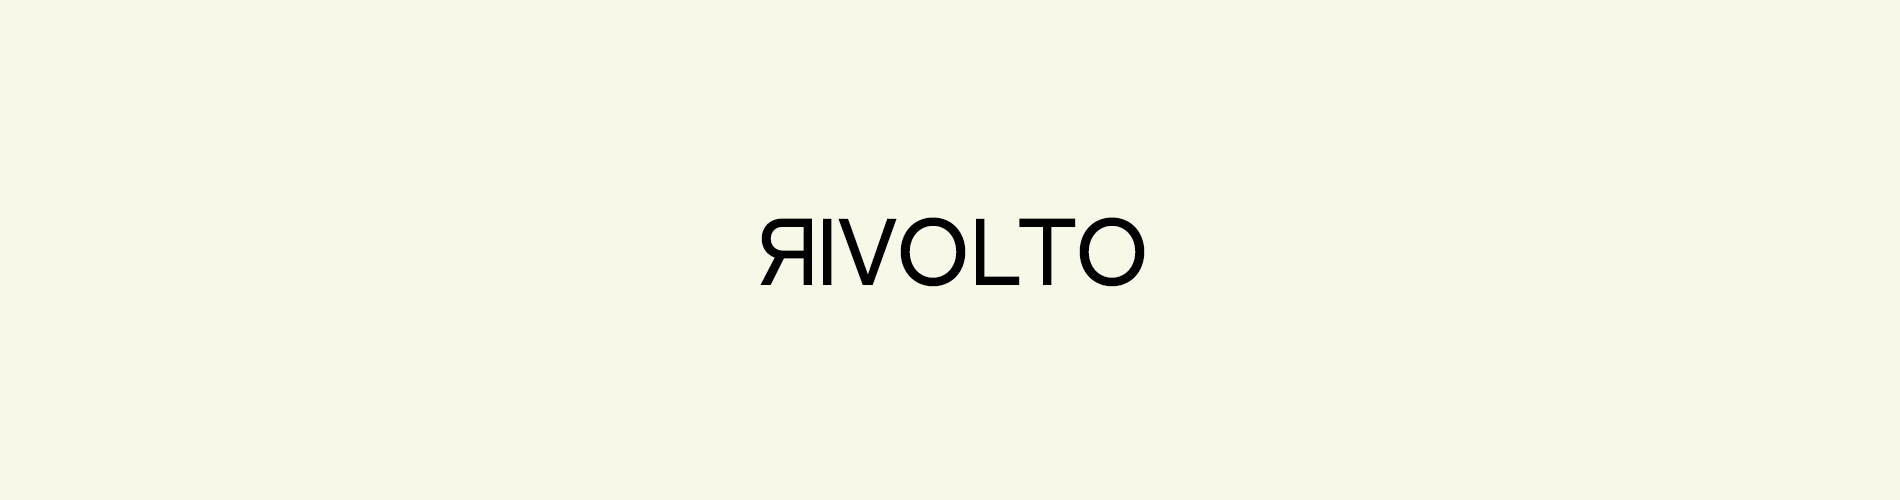 loghi_reversible_projects-RIVOLTO